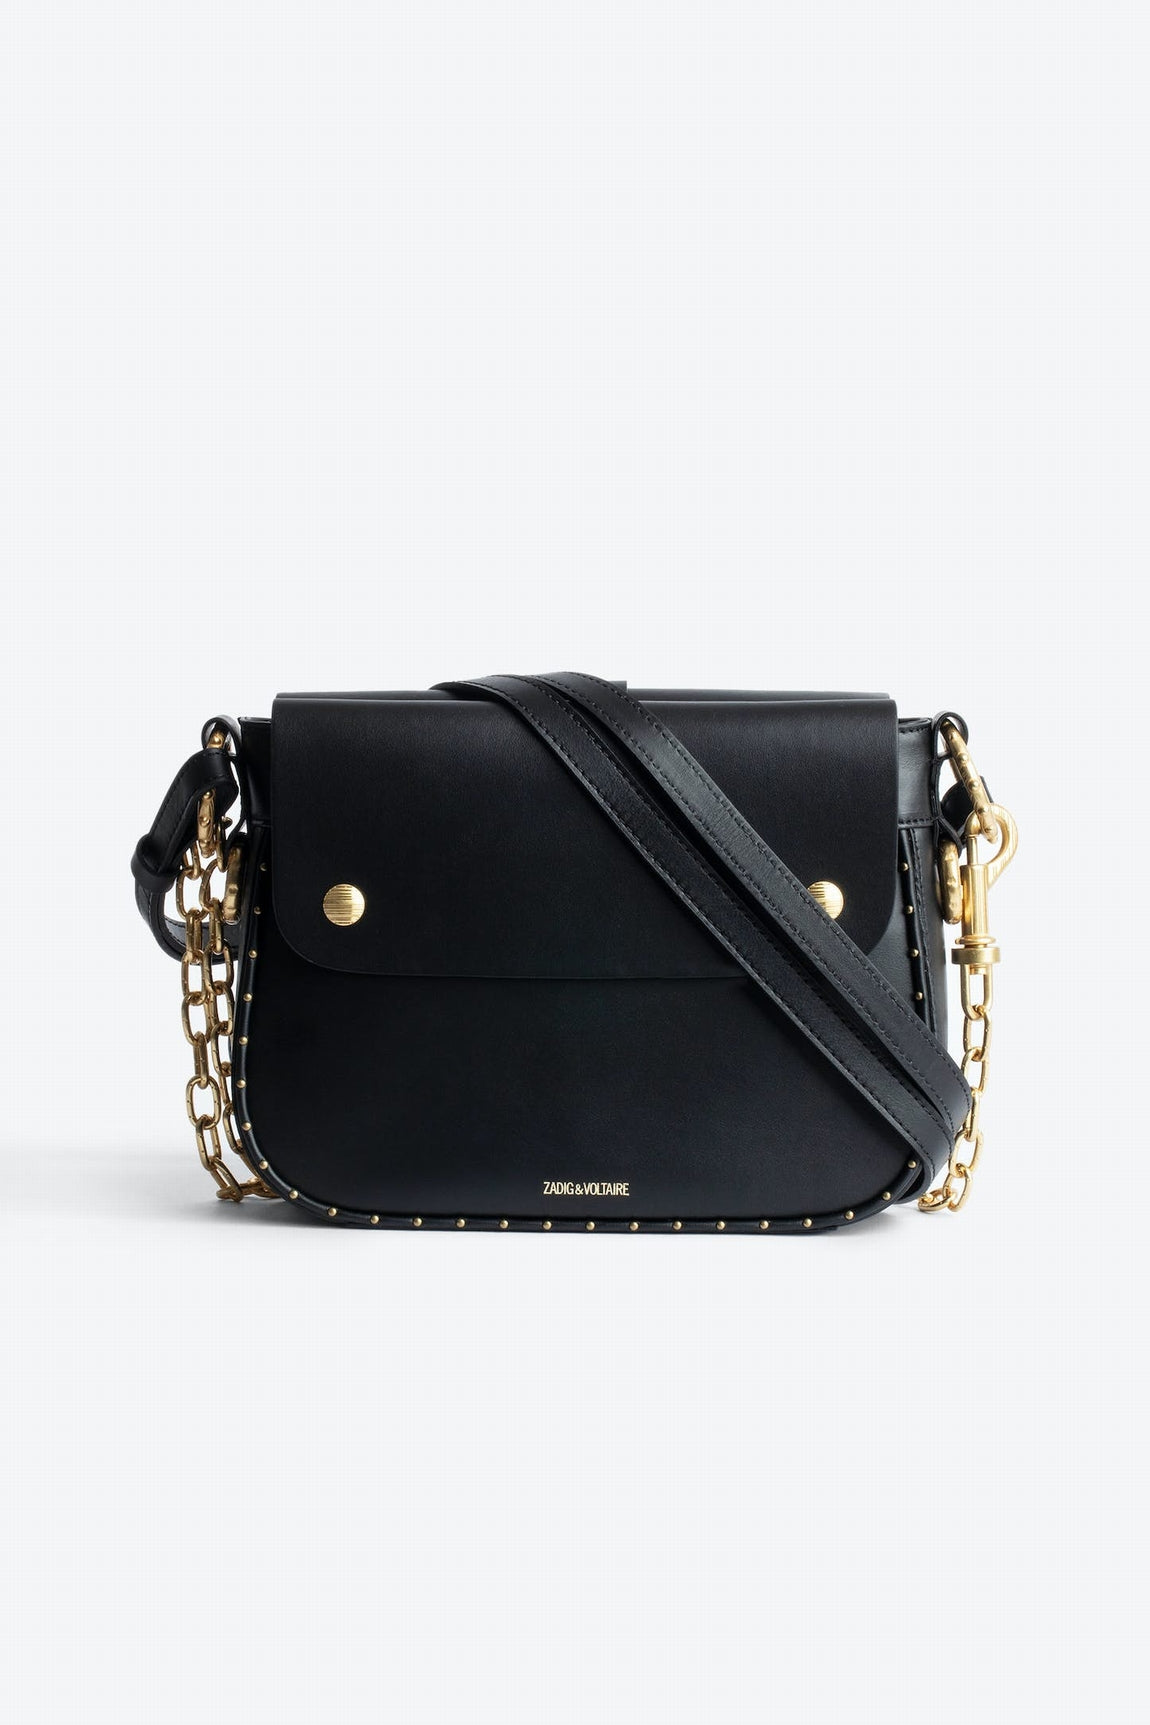 Kate bag, black-gold